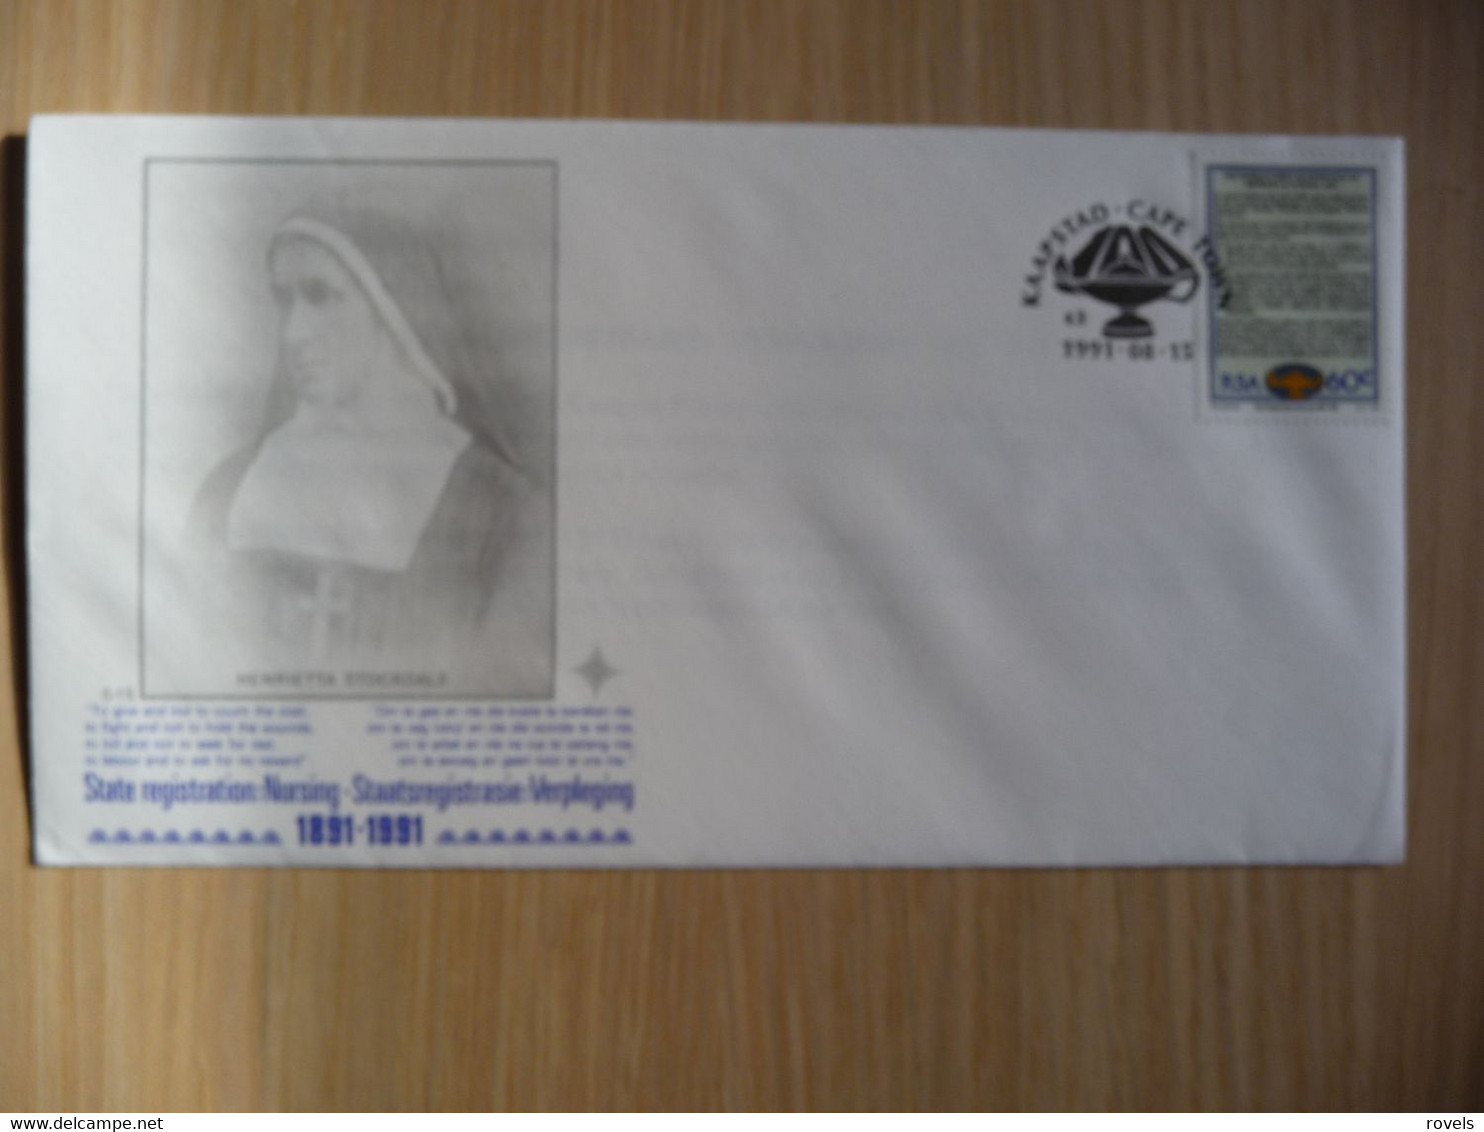 (8) South Africa RSA * FDC 1991 * First Registration Midwives & Nurses Nursing. * 5.15 - Briefe U. Dokumente